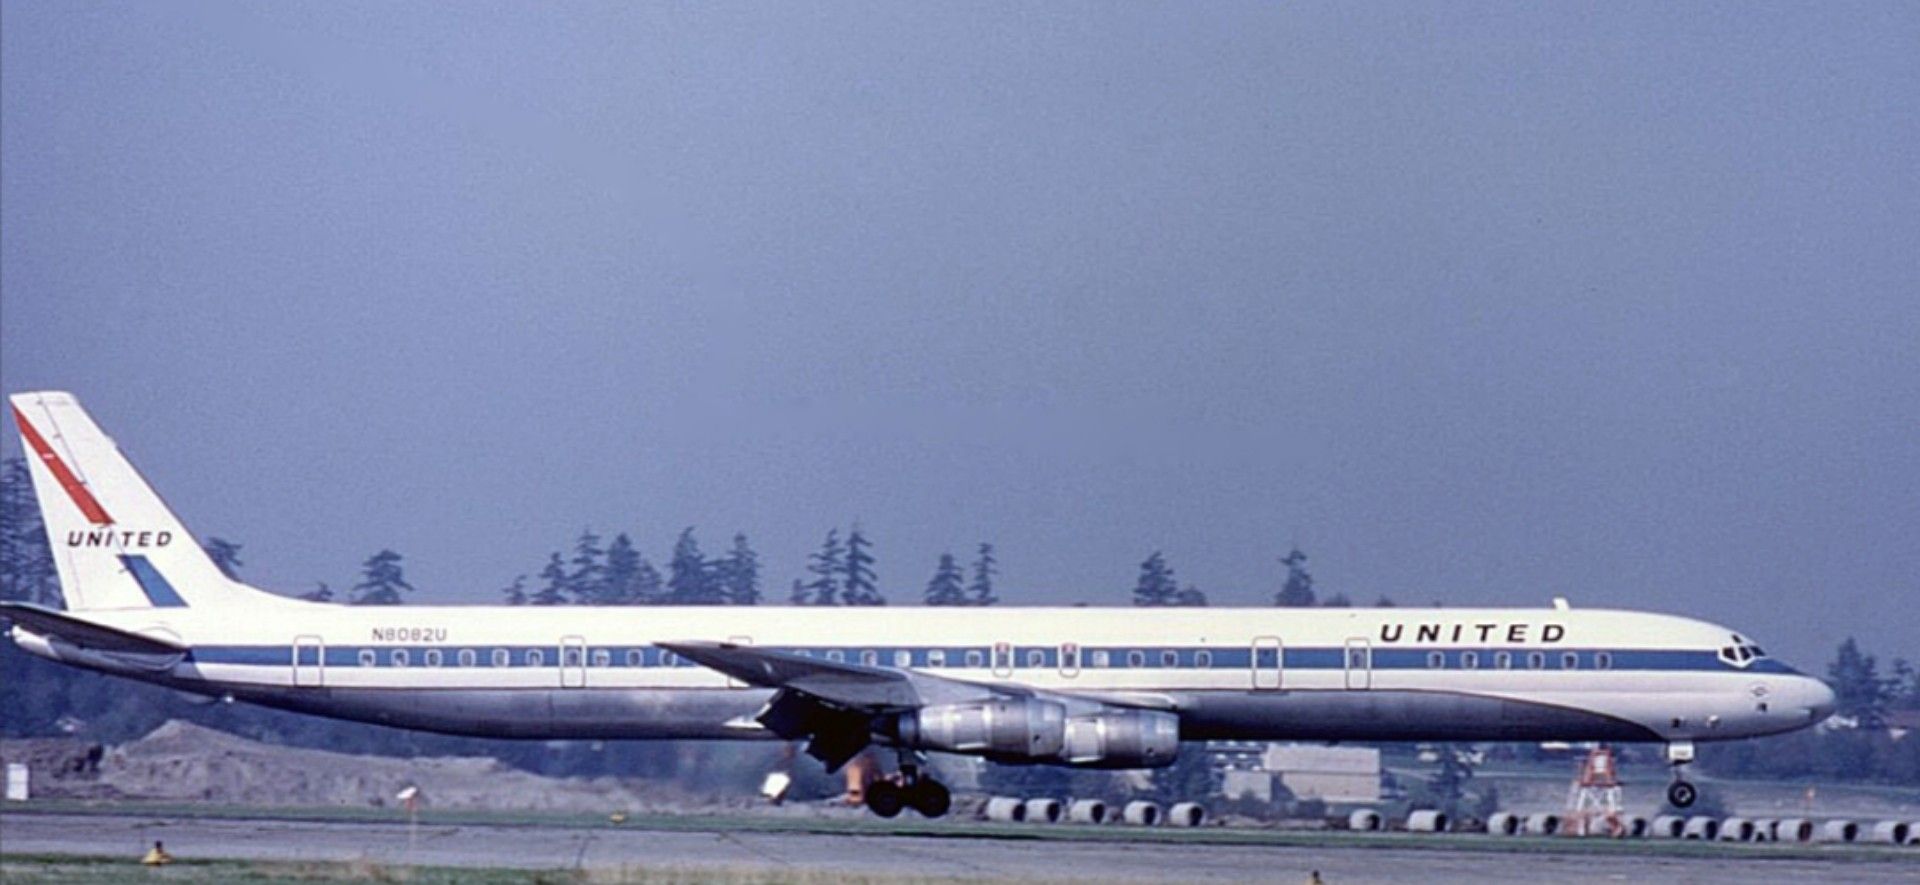 United Airlines Douglas DC-8-61